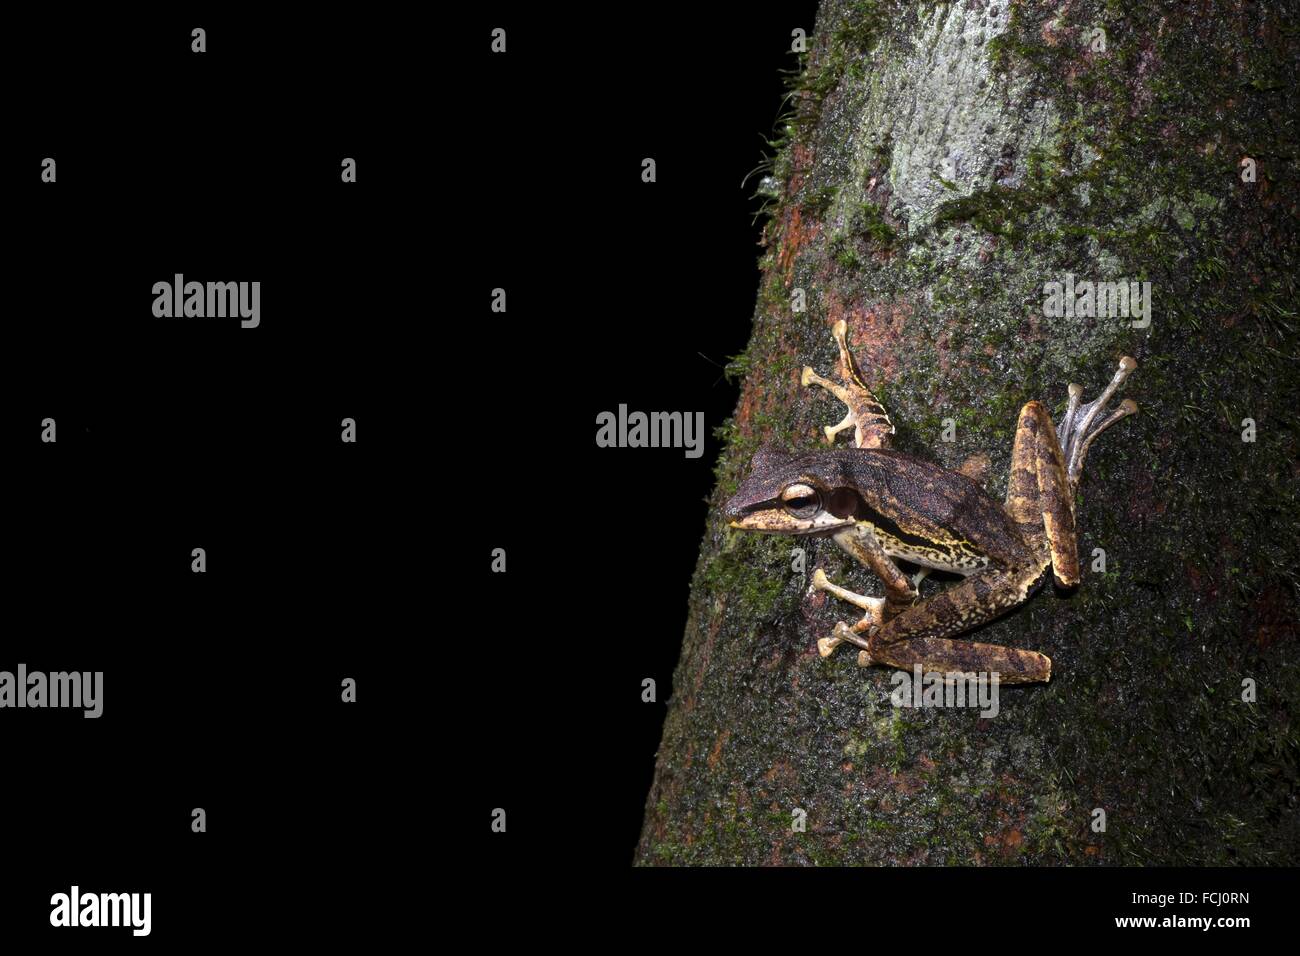 Dark orejudo Tree Frog Polypedates macrotis. Imagen tomada en el Parque Nacional Kubah, Sarawak, Malasia. Foto de stock